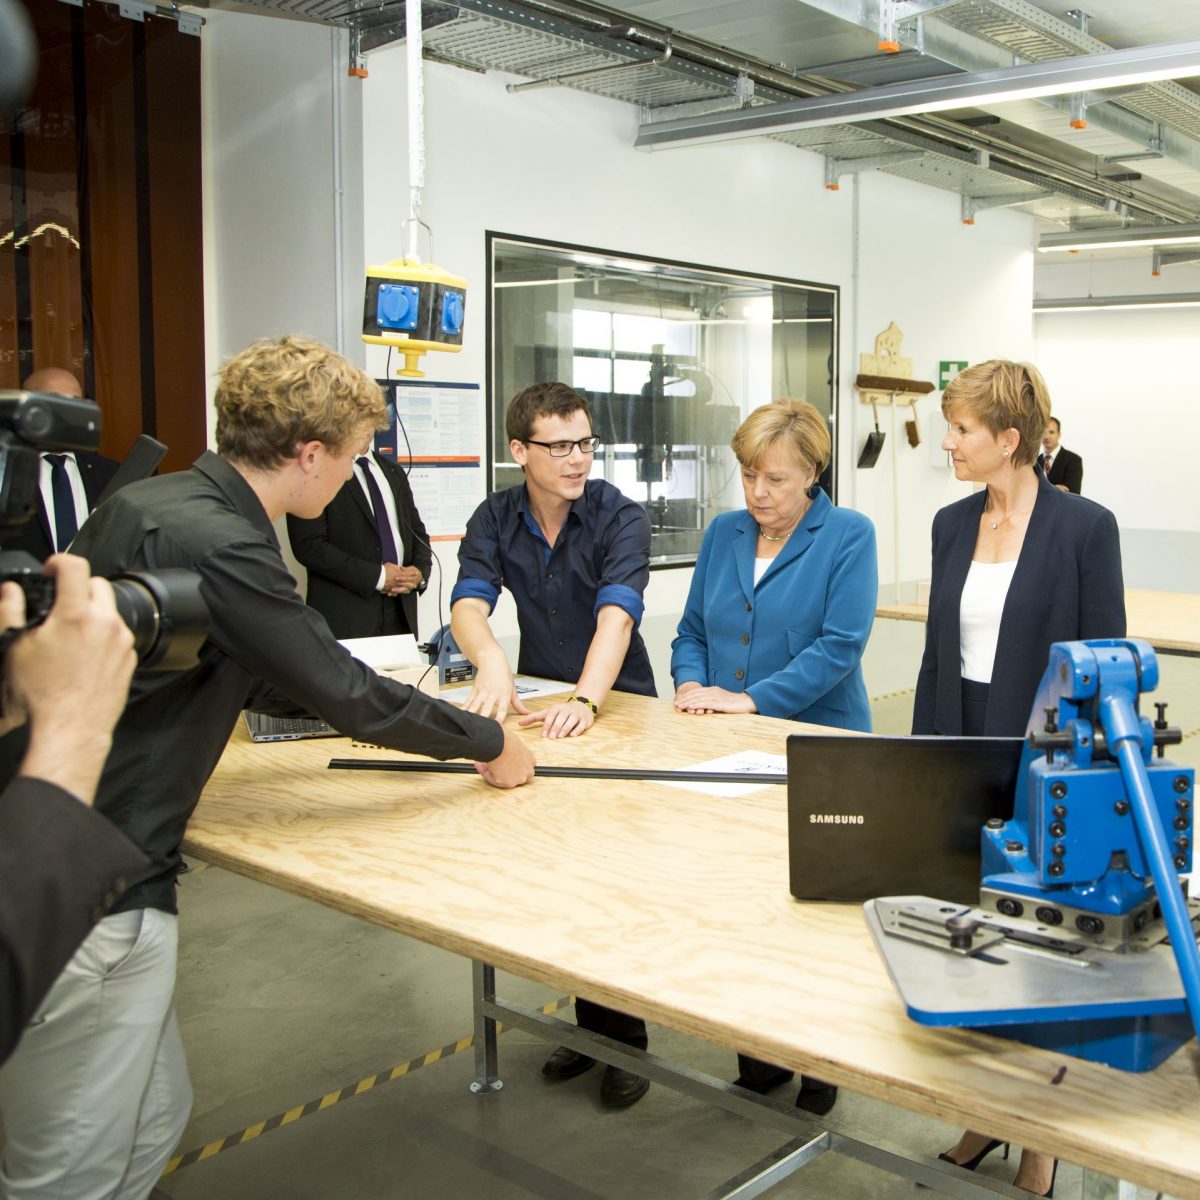 German chancellor Angela Merkel and entrepreneur Susanne Klatten (r.) tested sensors designed by ParkHere during a visit to TUM’s Entrepreneurship Center and UnternehmerTUM.